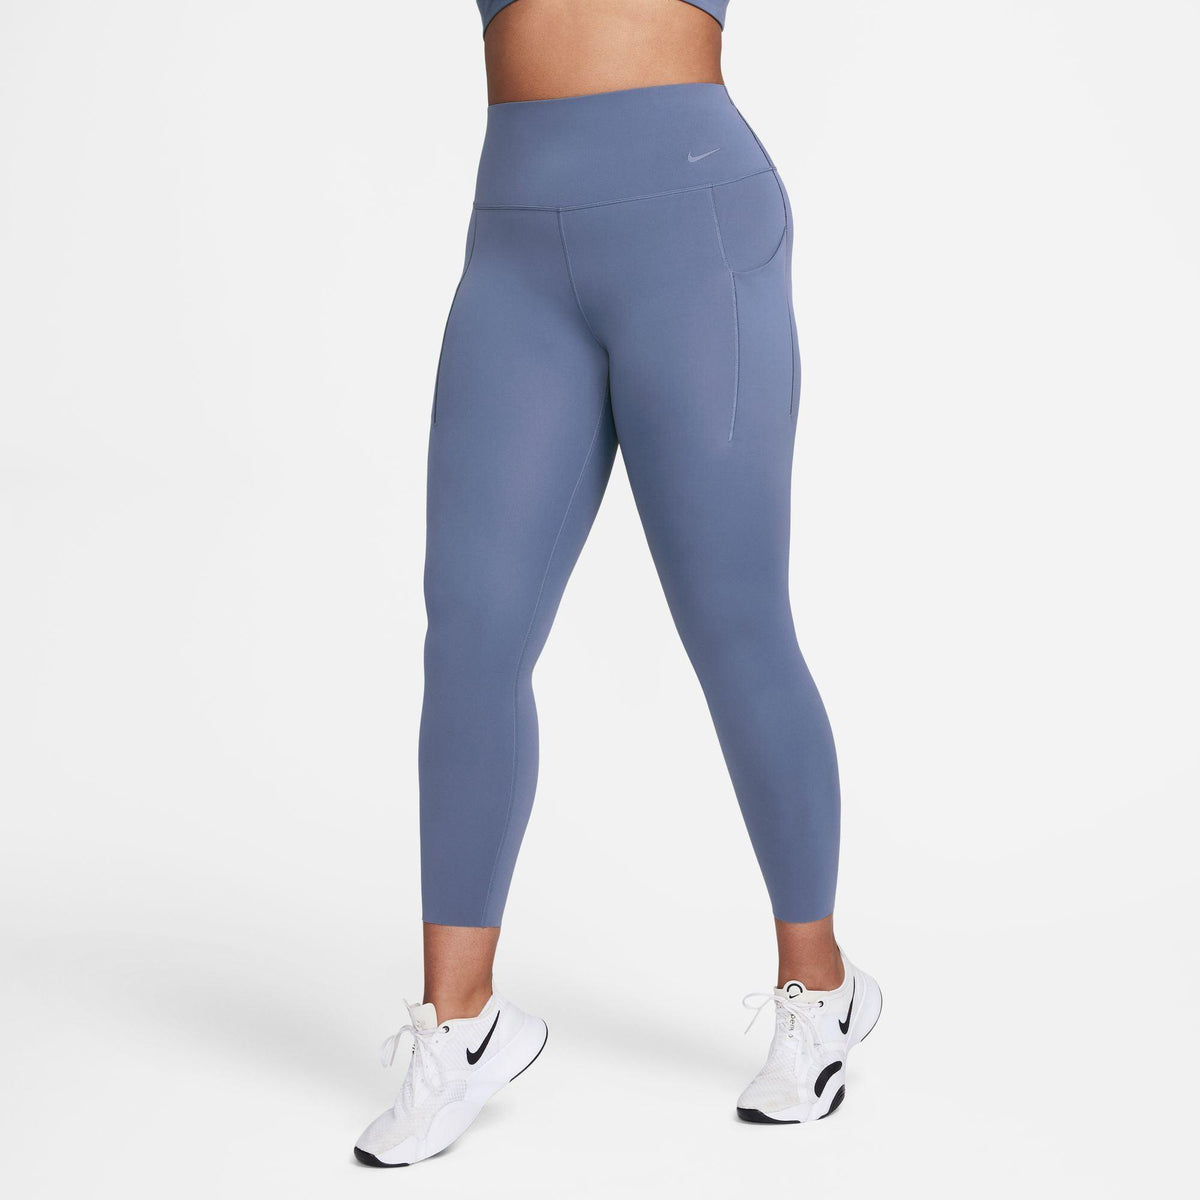 Nike-Women's Nike Universa-Diffused Blue/Black-Pacers Running